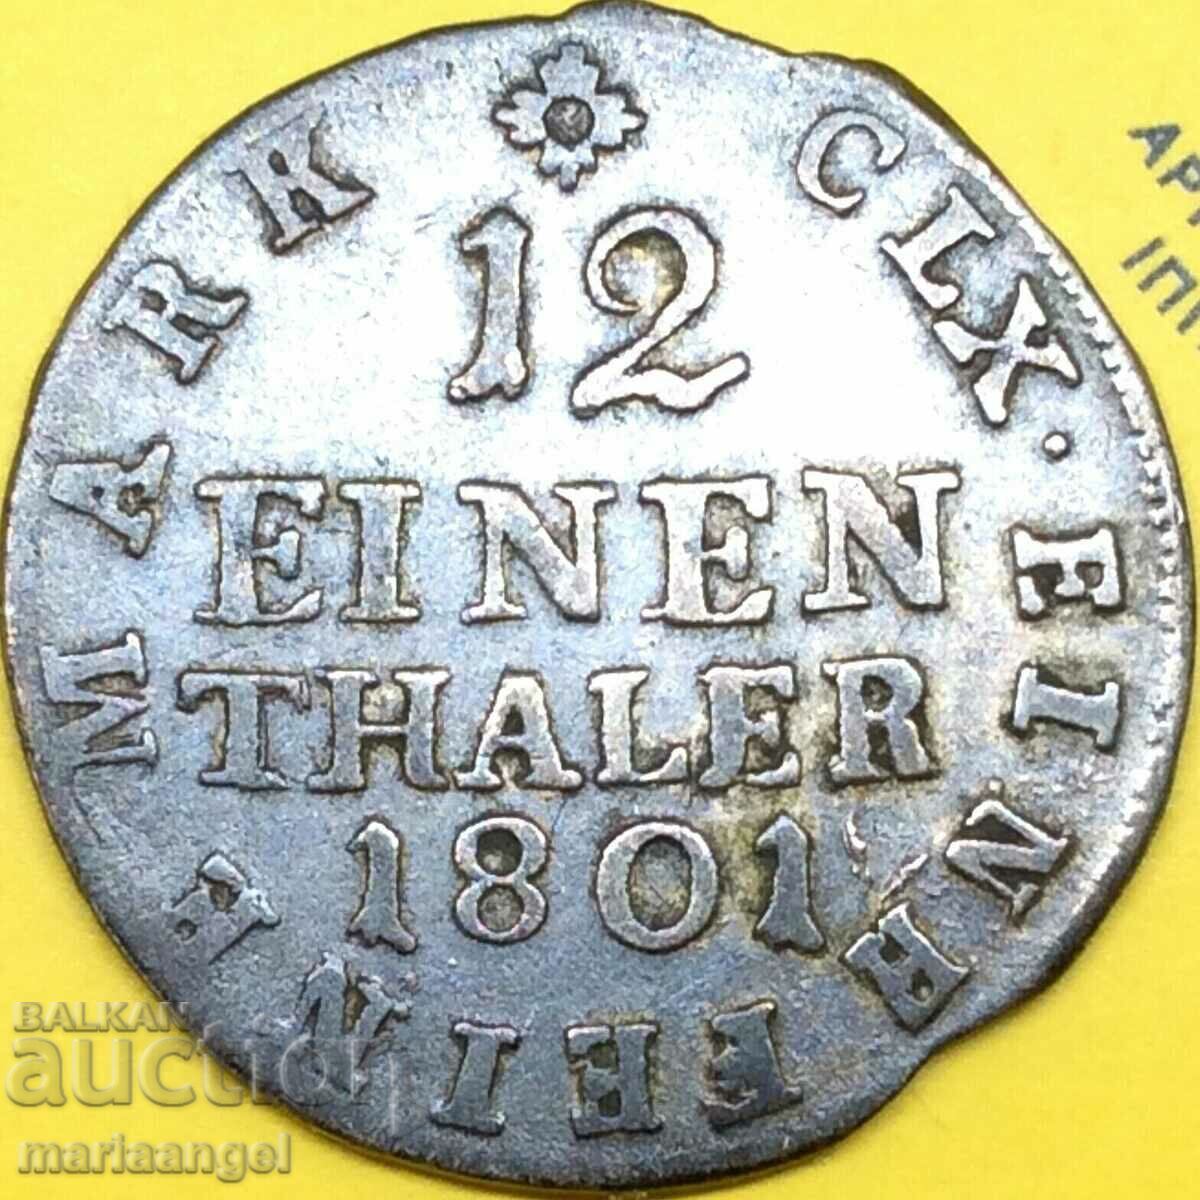 Saxony 1/12 thaler 1801 Friedrich August silver - quite rare